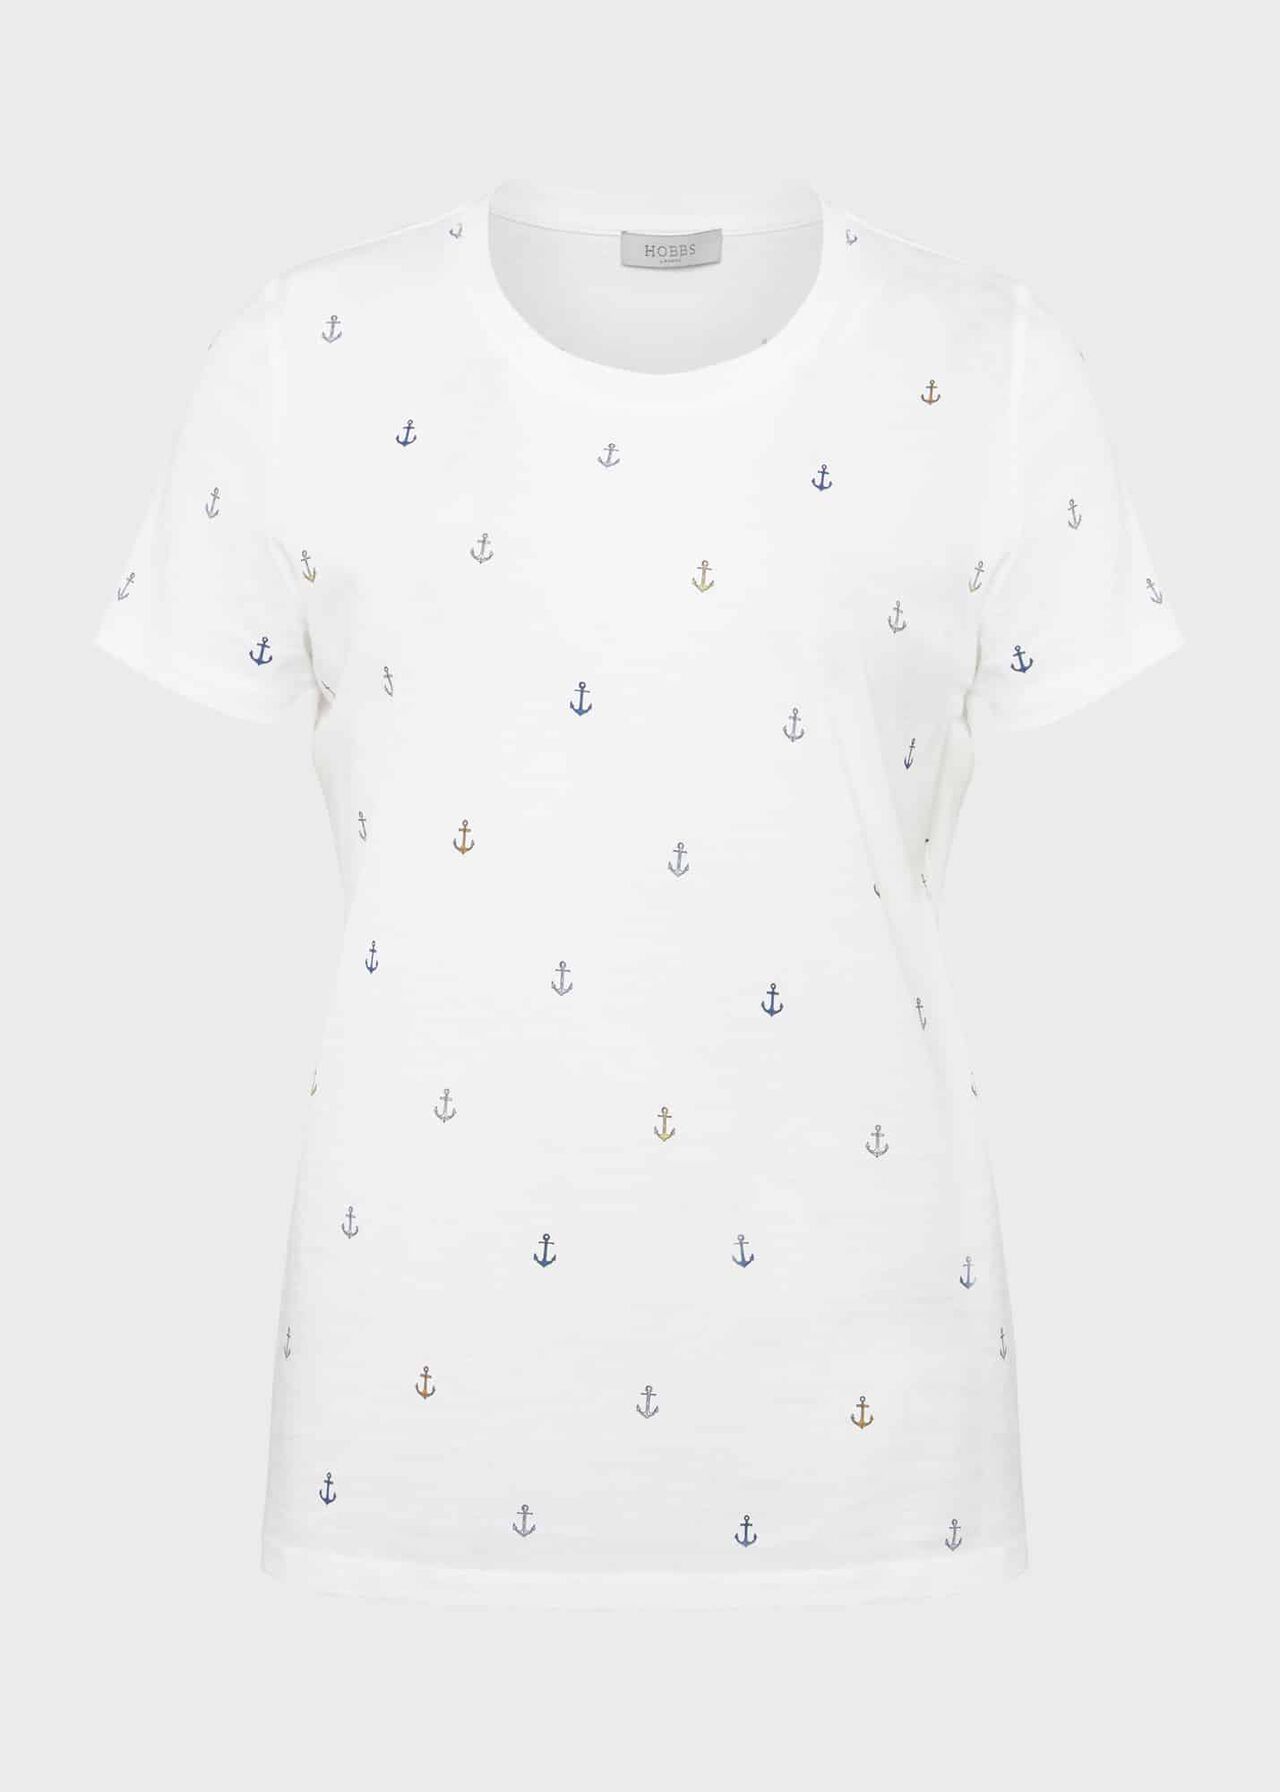 Pixie Cotton Printed T-Shirt, White Multi, hi-res